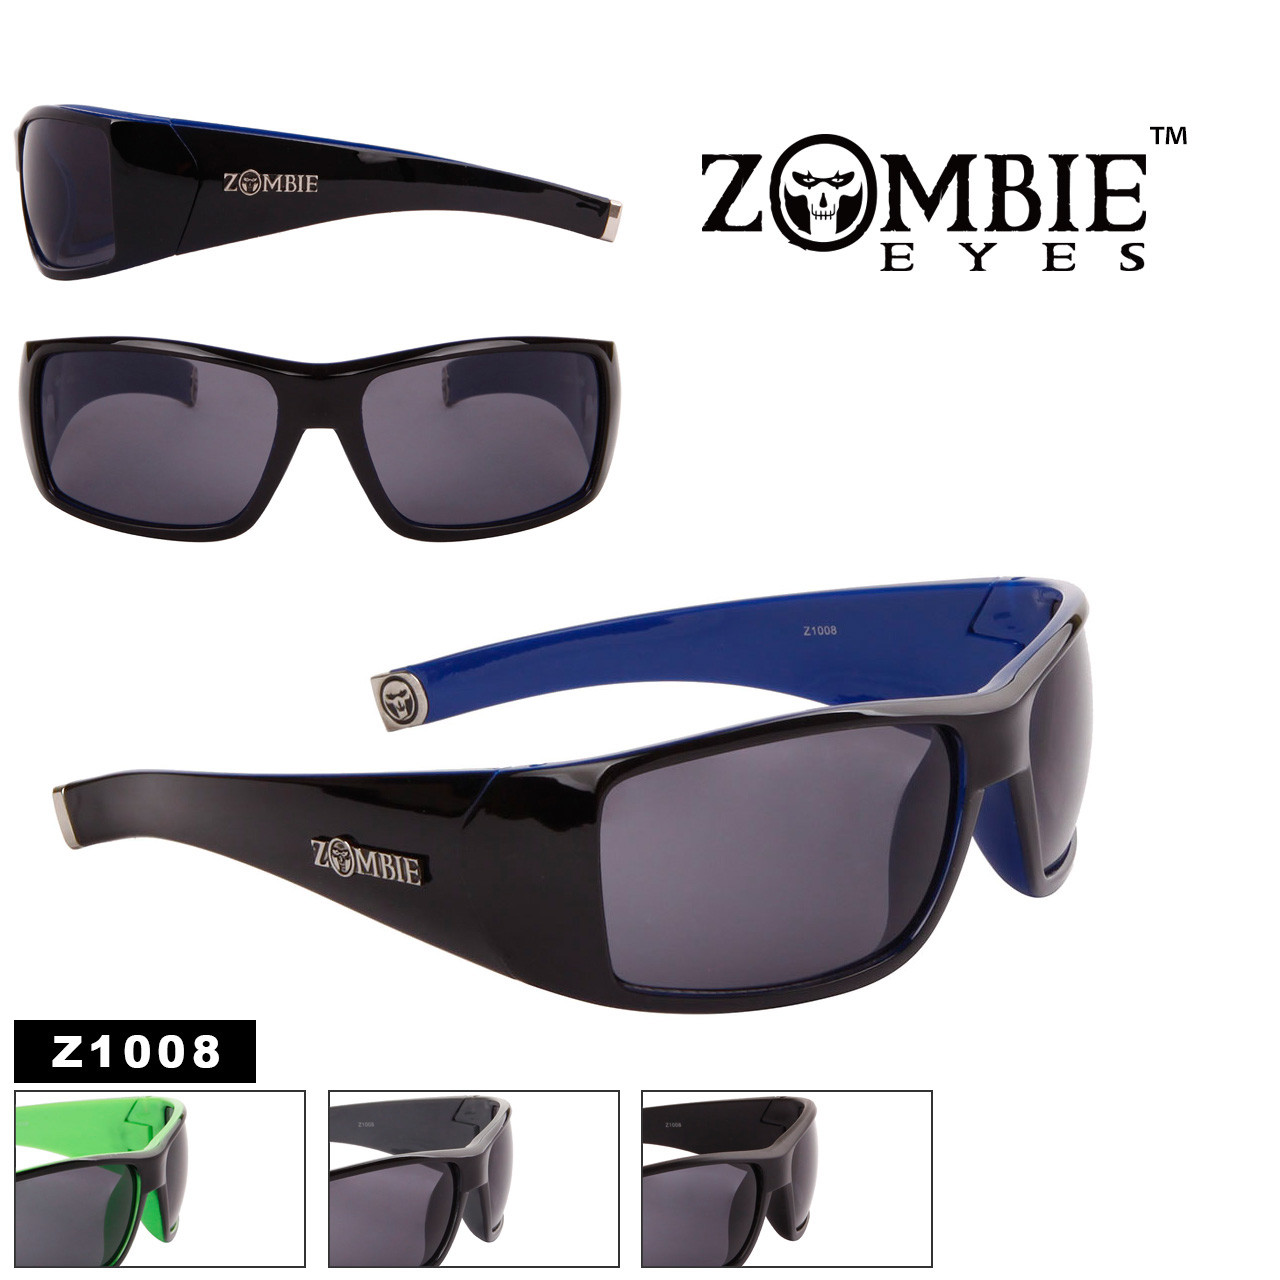 Zombie Eyes™ Men's Designer Sunglasses - Style #Z1008 